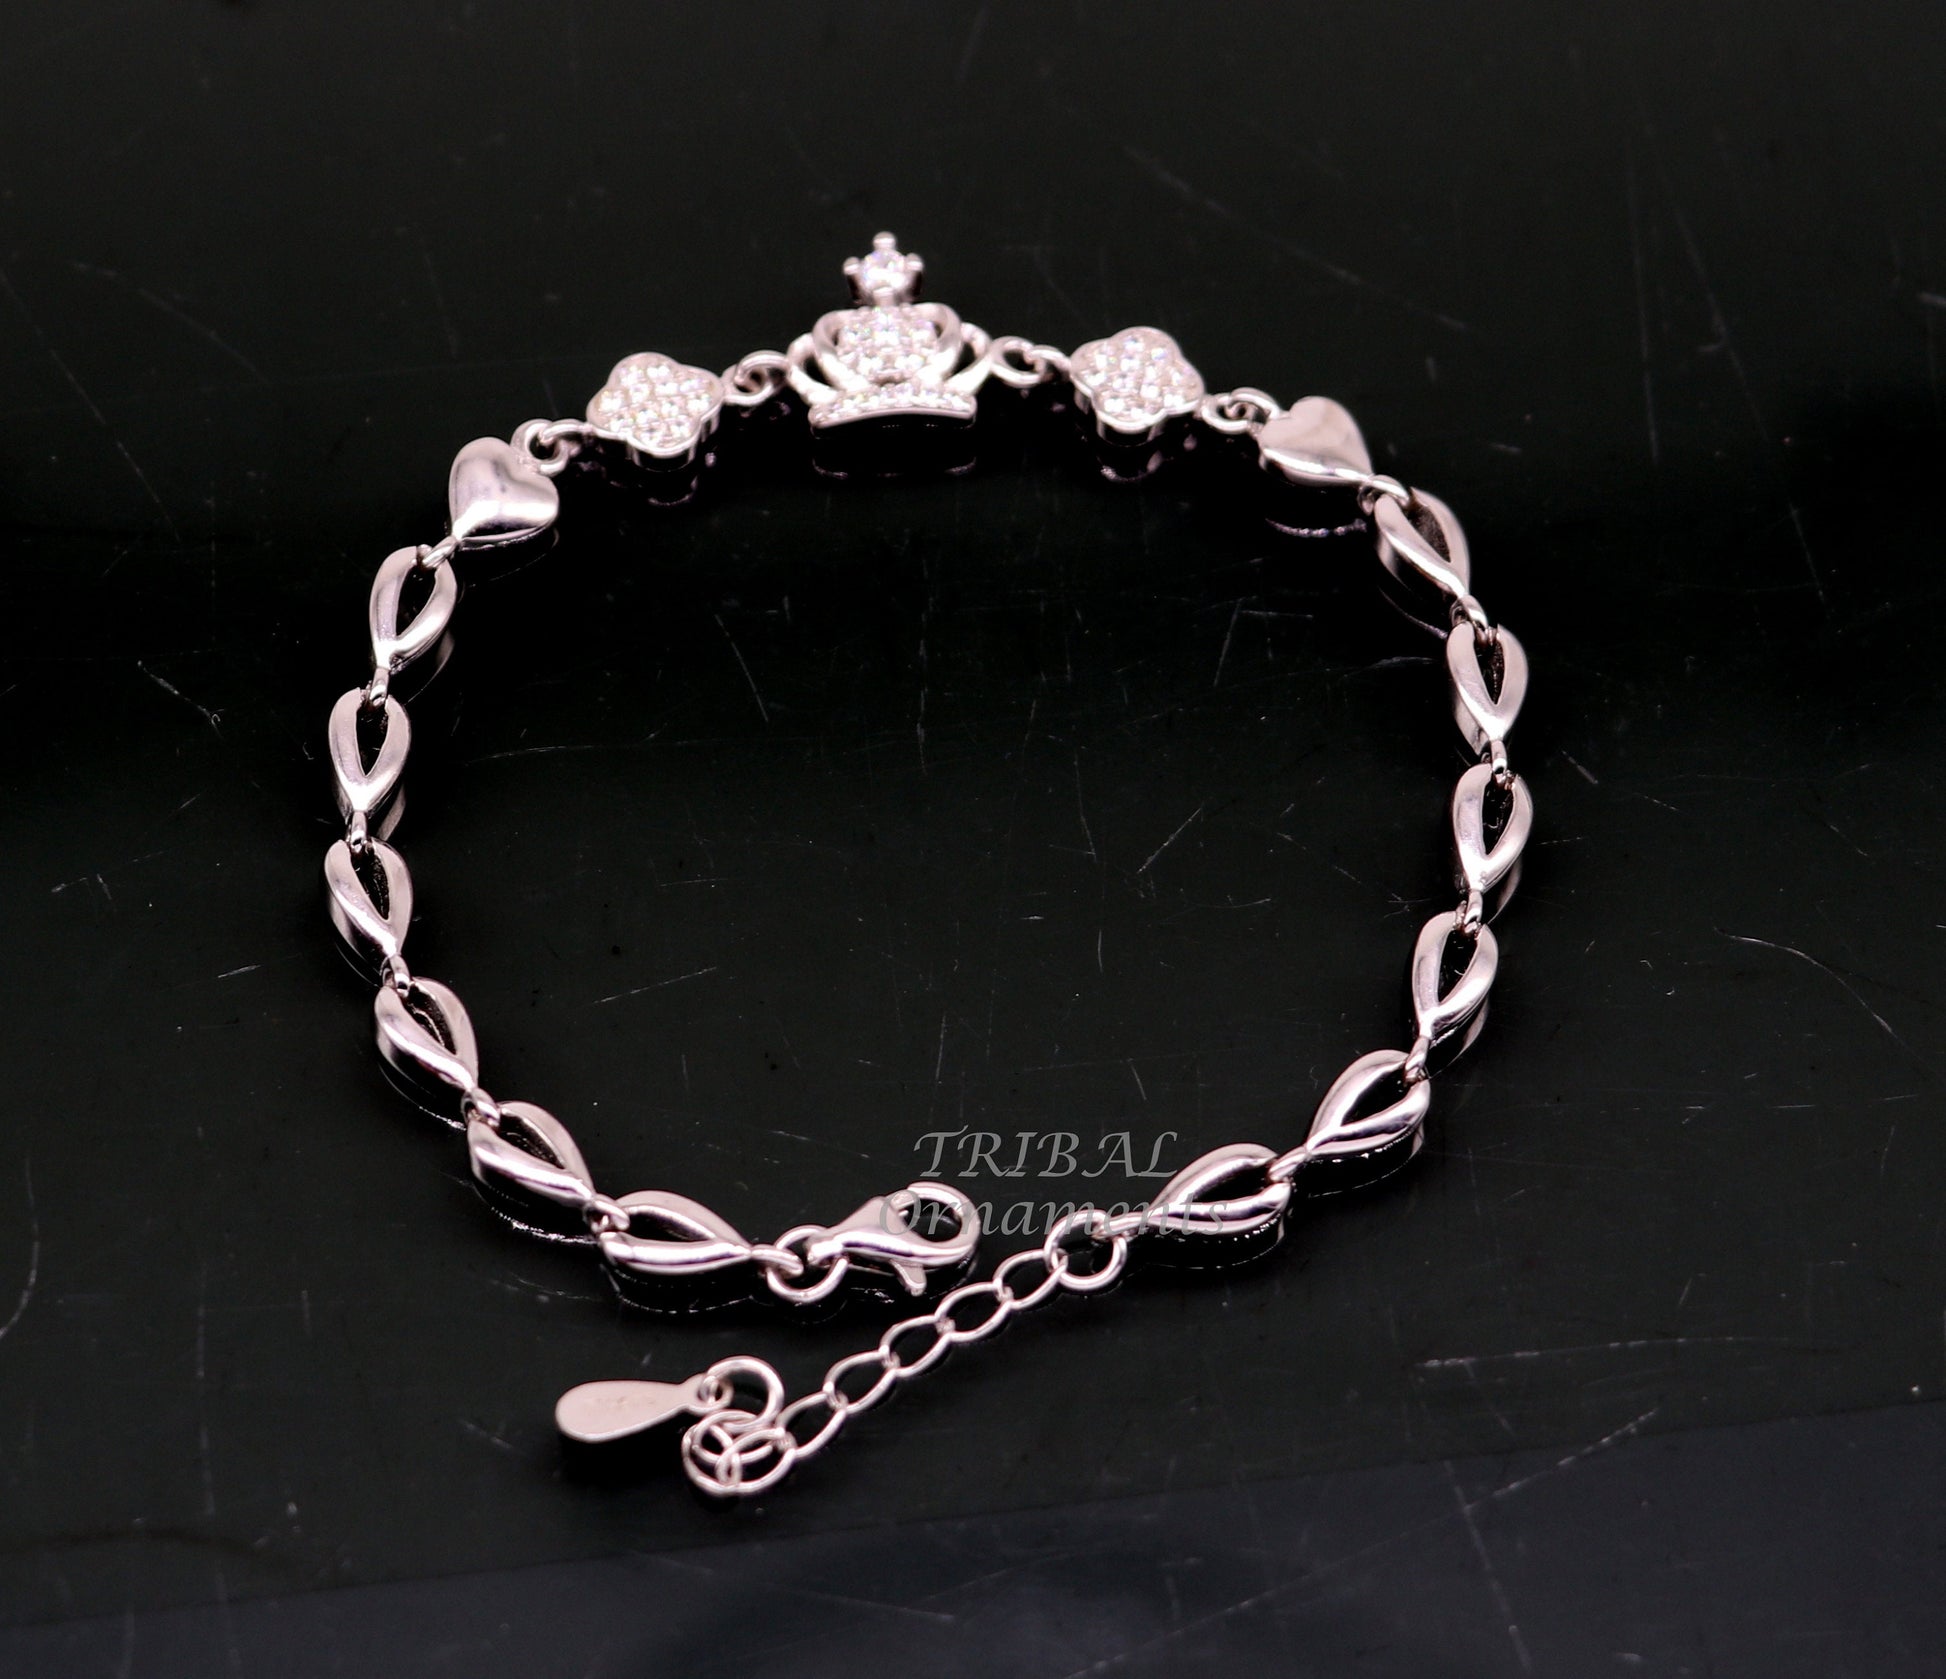 925 sterling silver handmade link chain Bracelet for girl's, Dainty Silver Bracelet, Chain Bracelet, Minimal Jewelry, Gift For Women sbr381 - TRIBAL ORNAMENTS